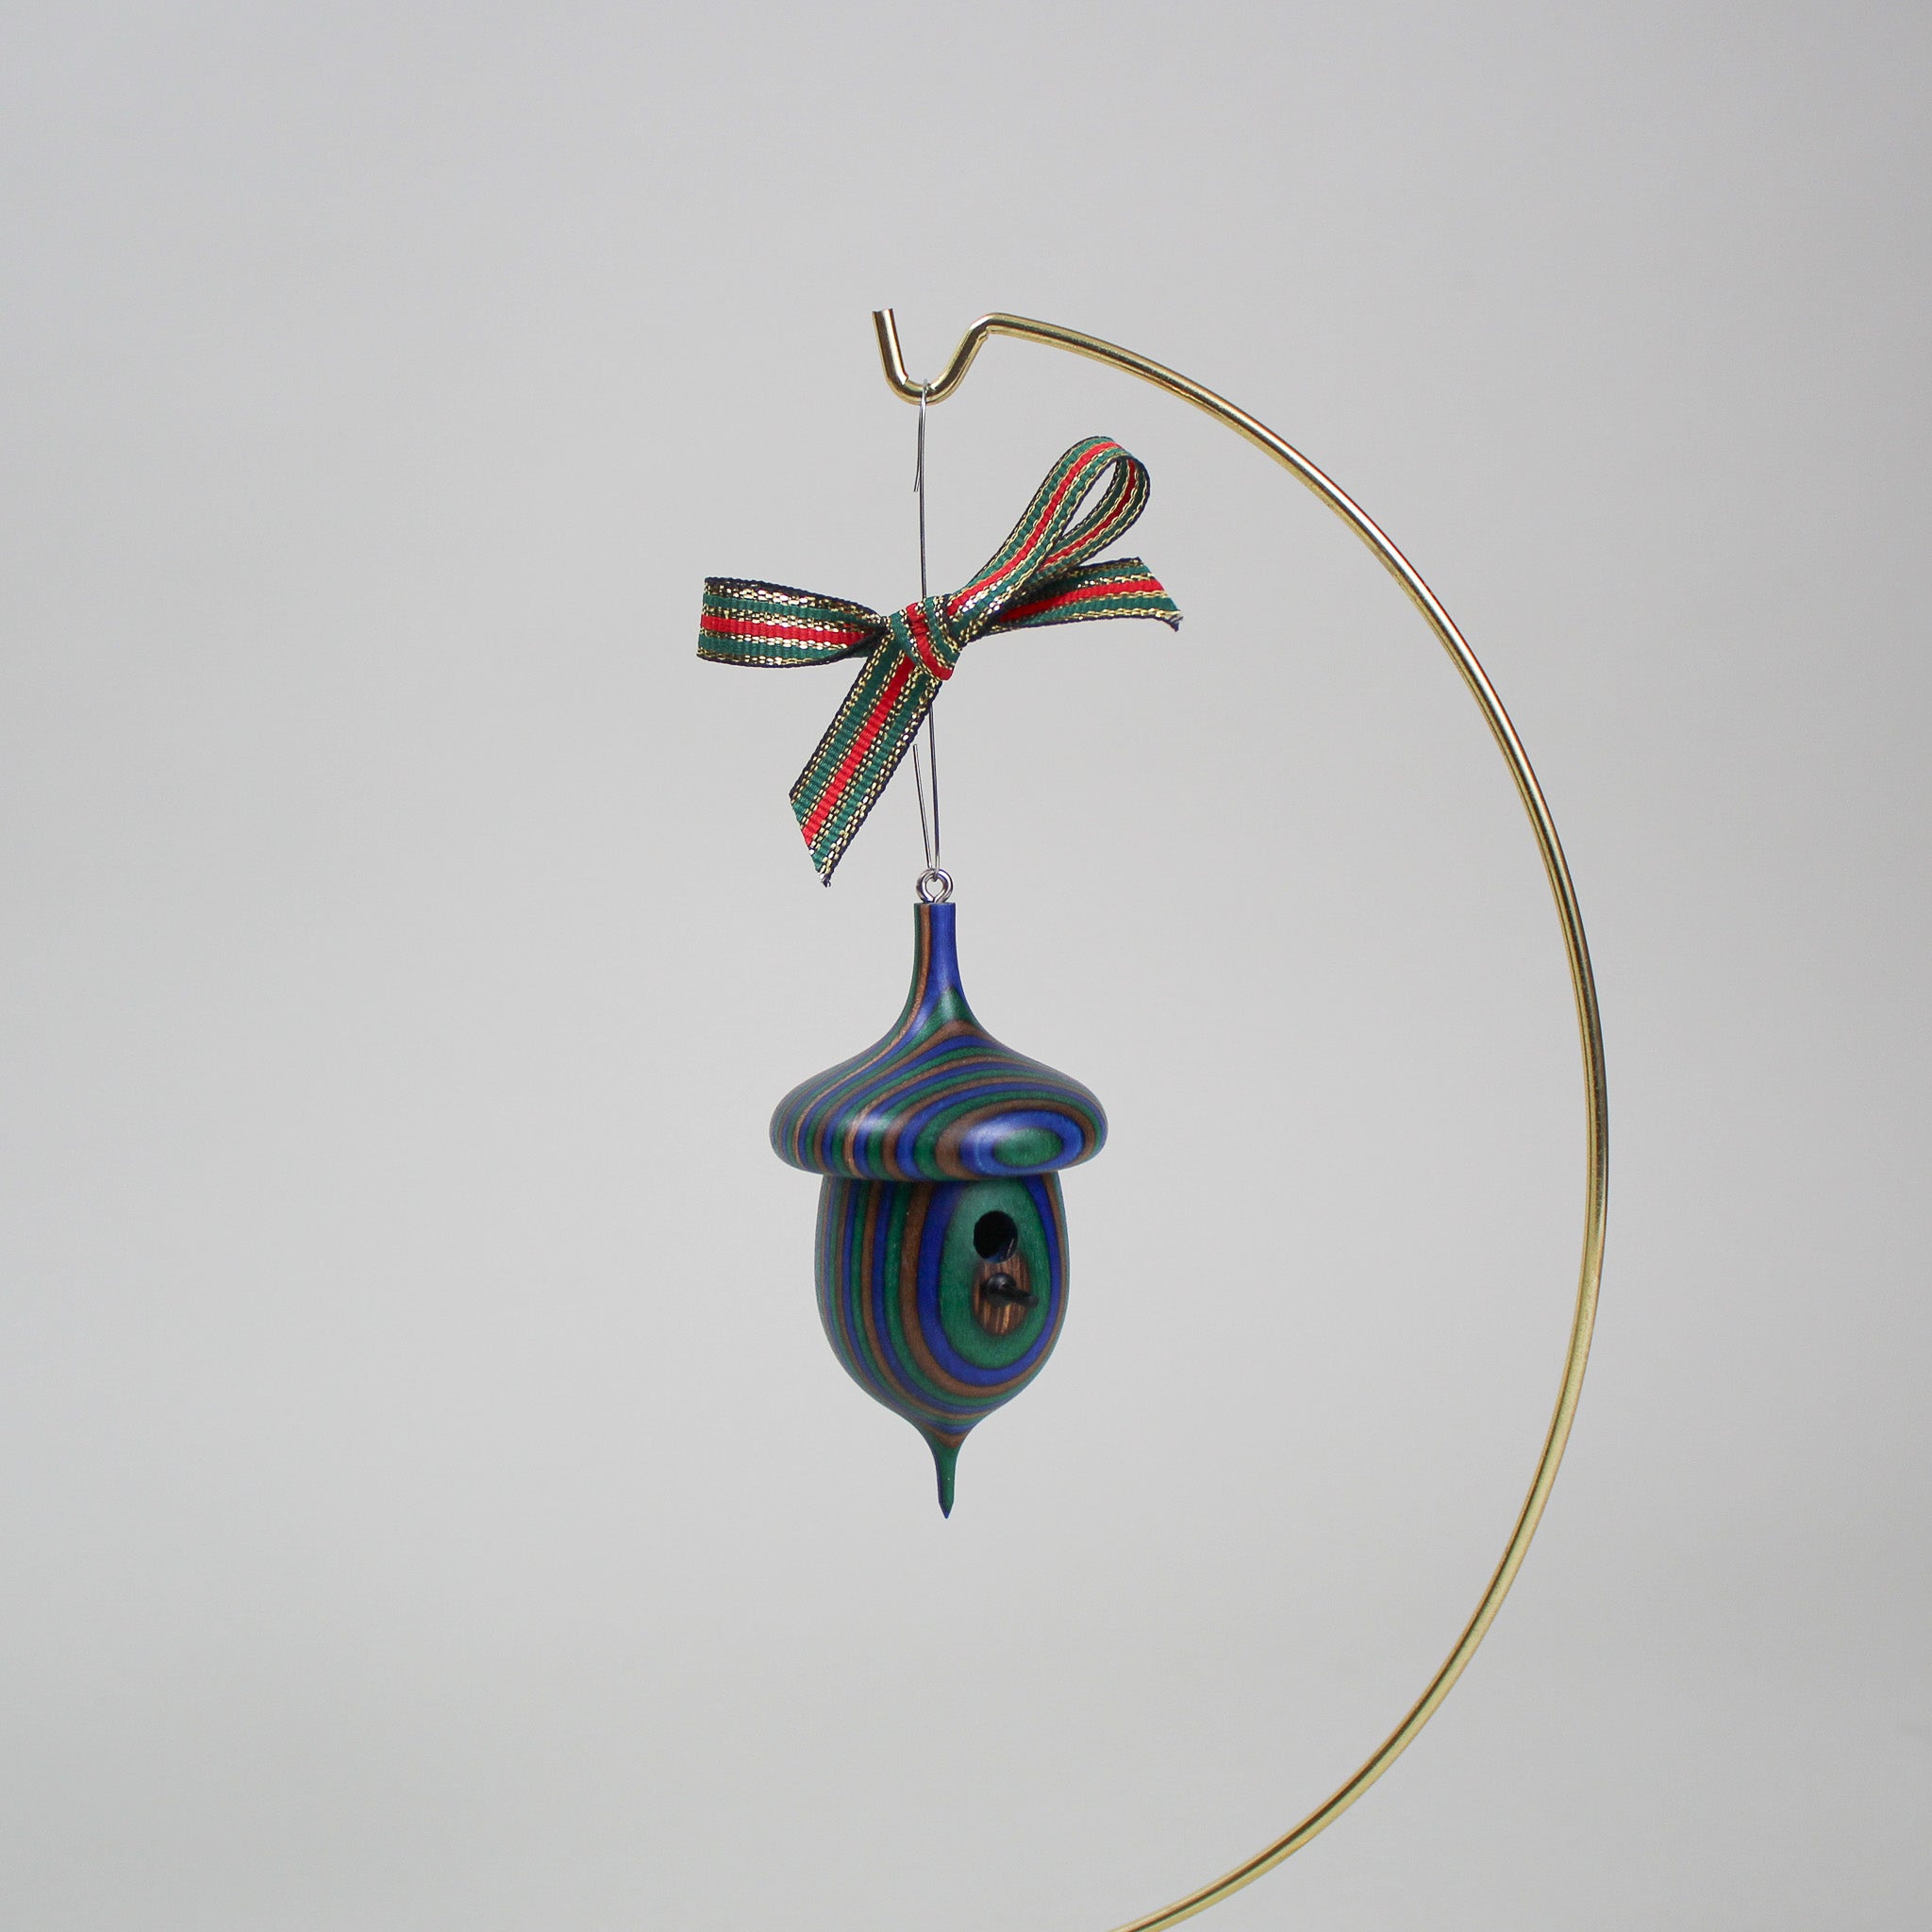 Acorn Birdhouse Ornament